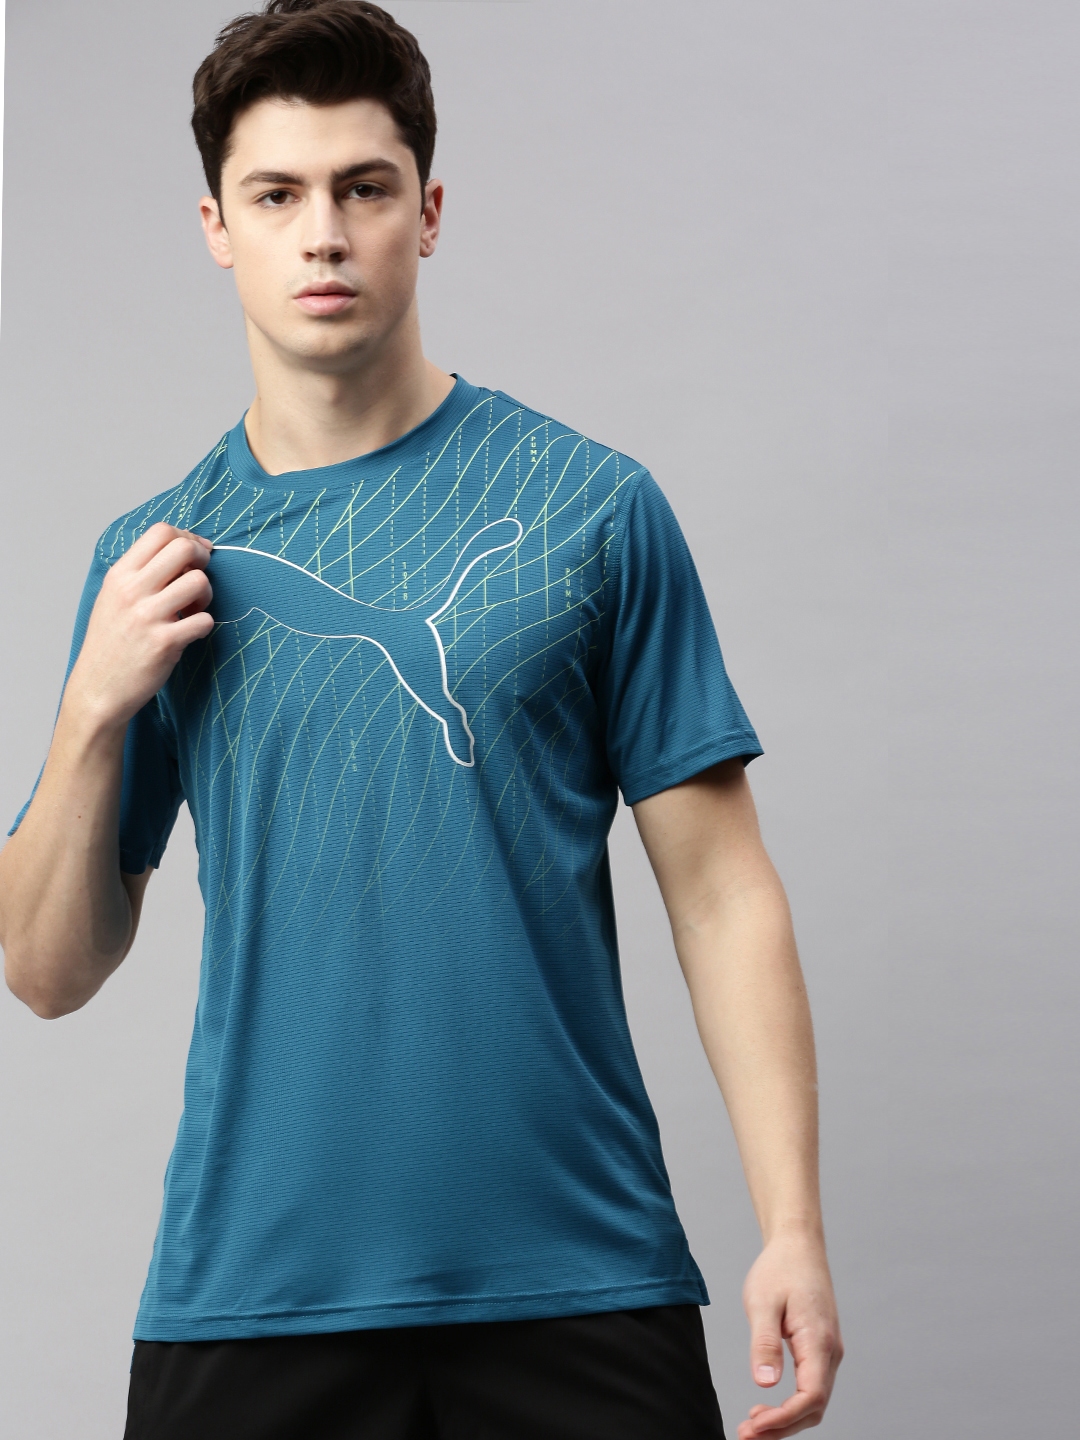 Buy Puma Men Teal Blue & Green Printed Cat SS Round Neck Running T Shirt - Tshirts for Men 